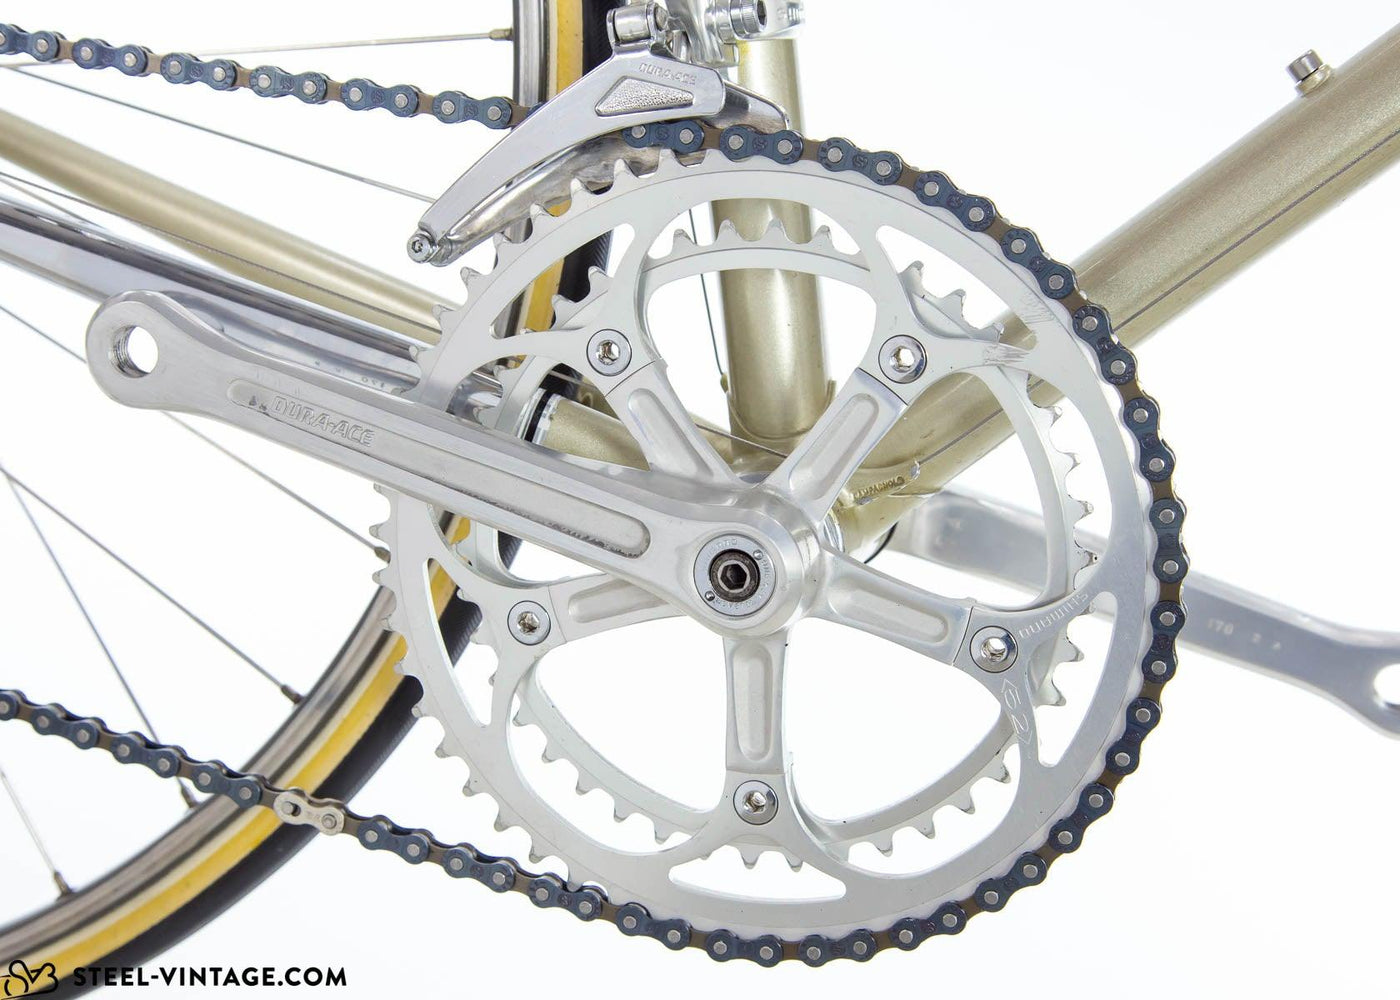 Eddy Merckx Professional Classic Road Bicycle 1980s - Steel Vintage Bikes